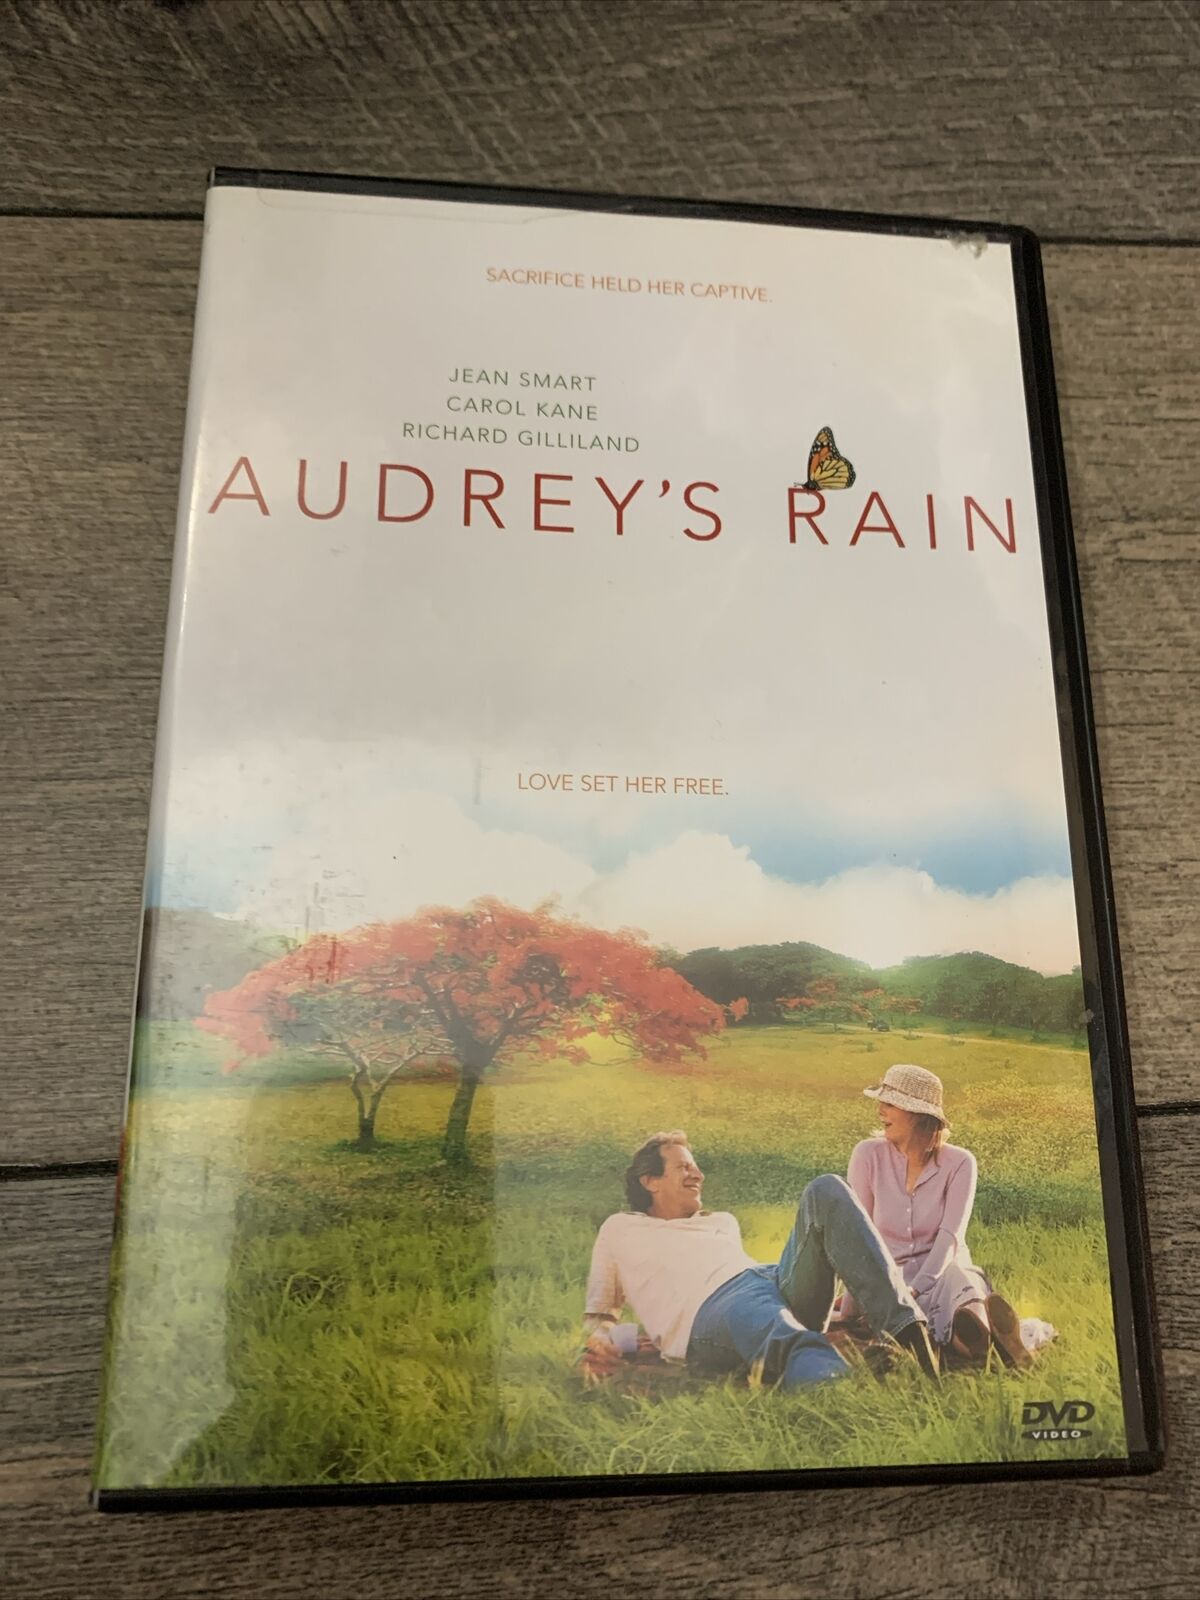 Audreys Rain (DVD, 2006) Inspirational GT Media Gaiam Company 88 Minutes